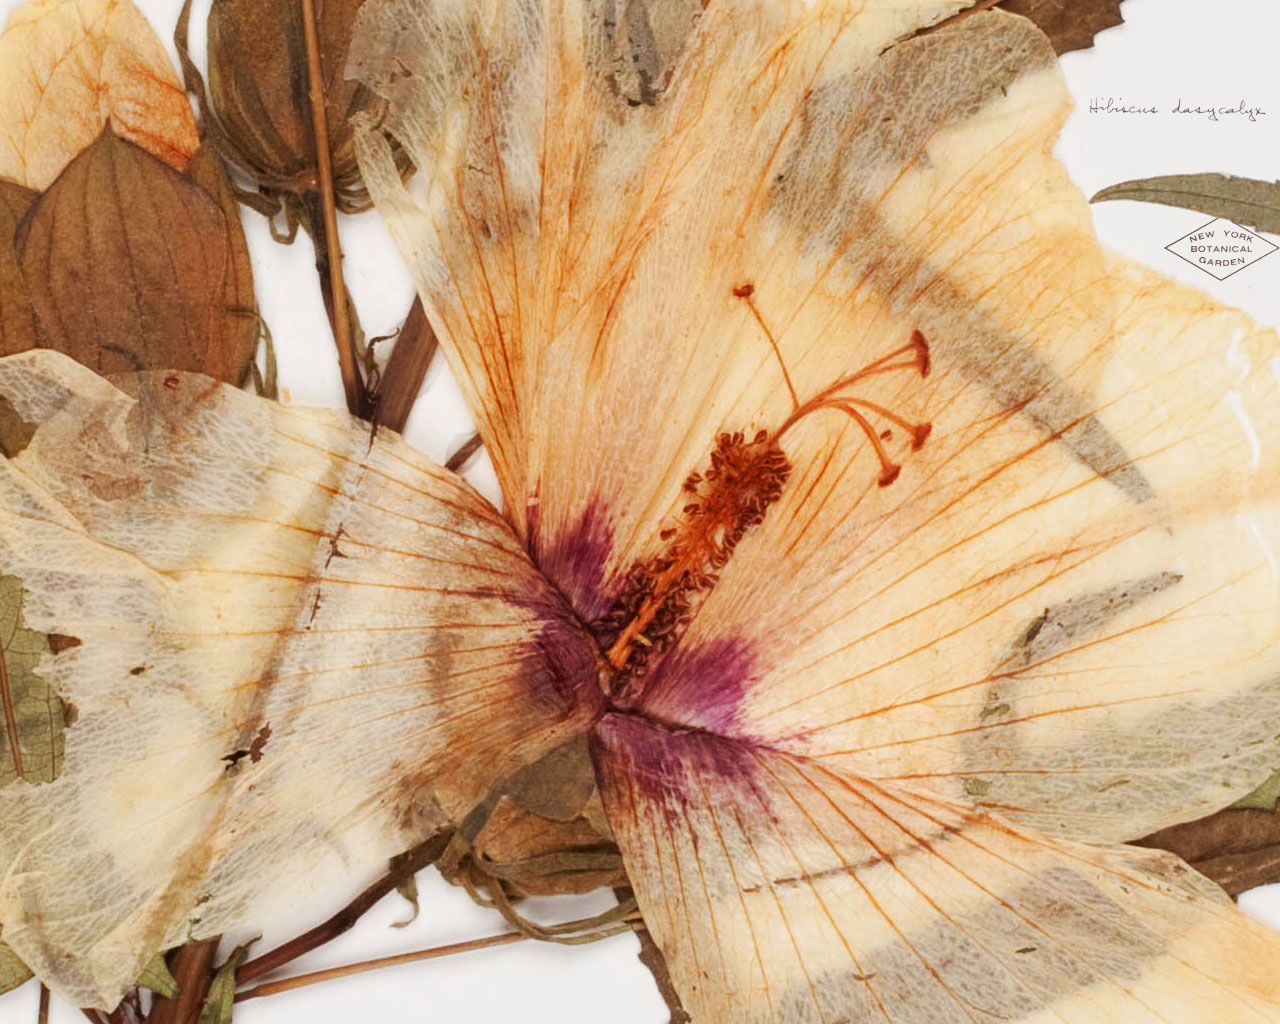 ... Photo Repro: More Free NYBG Wallpaper - Rare Hibiscus dasycalyx